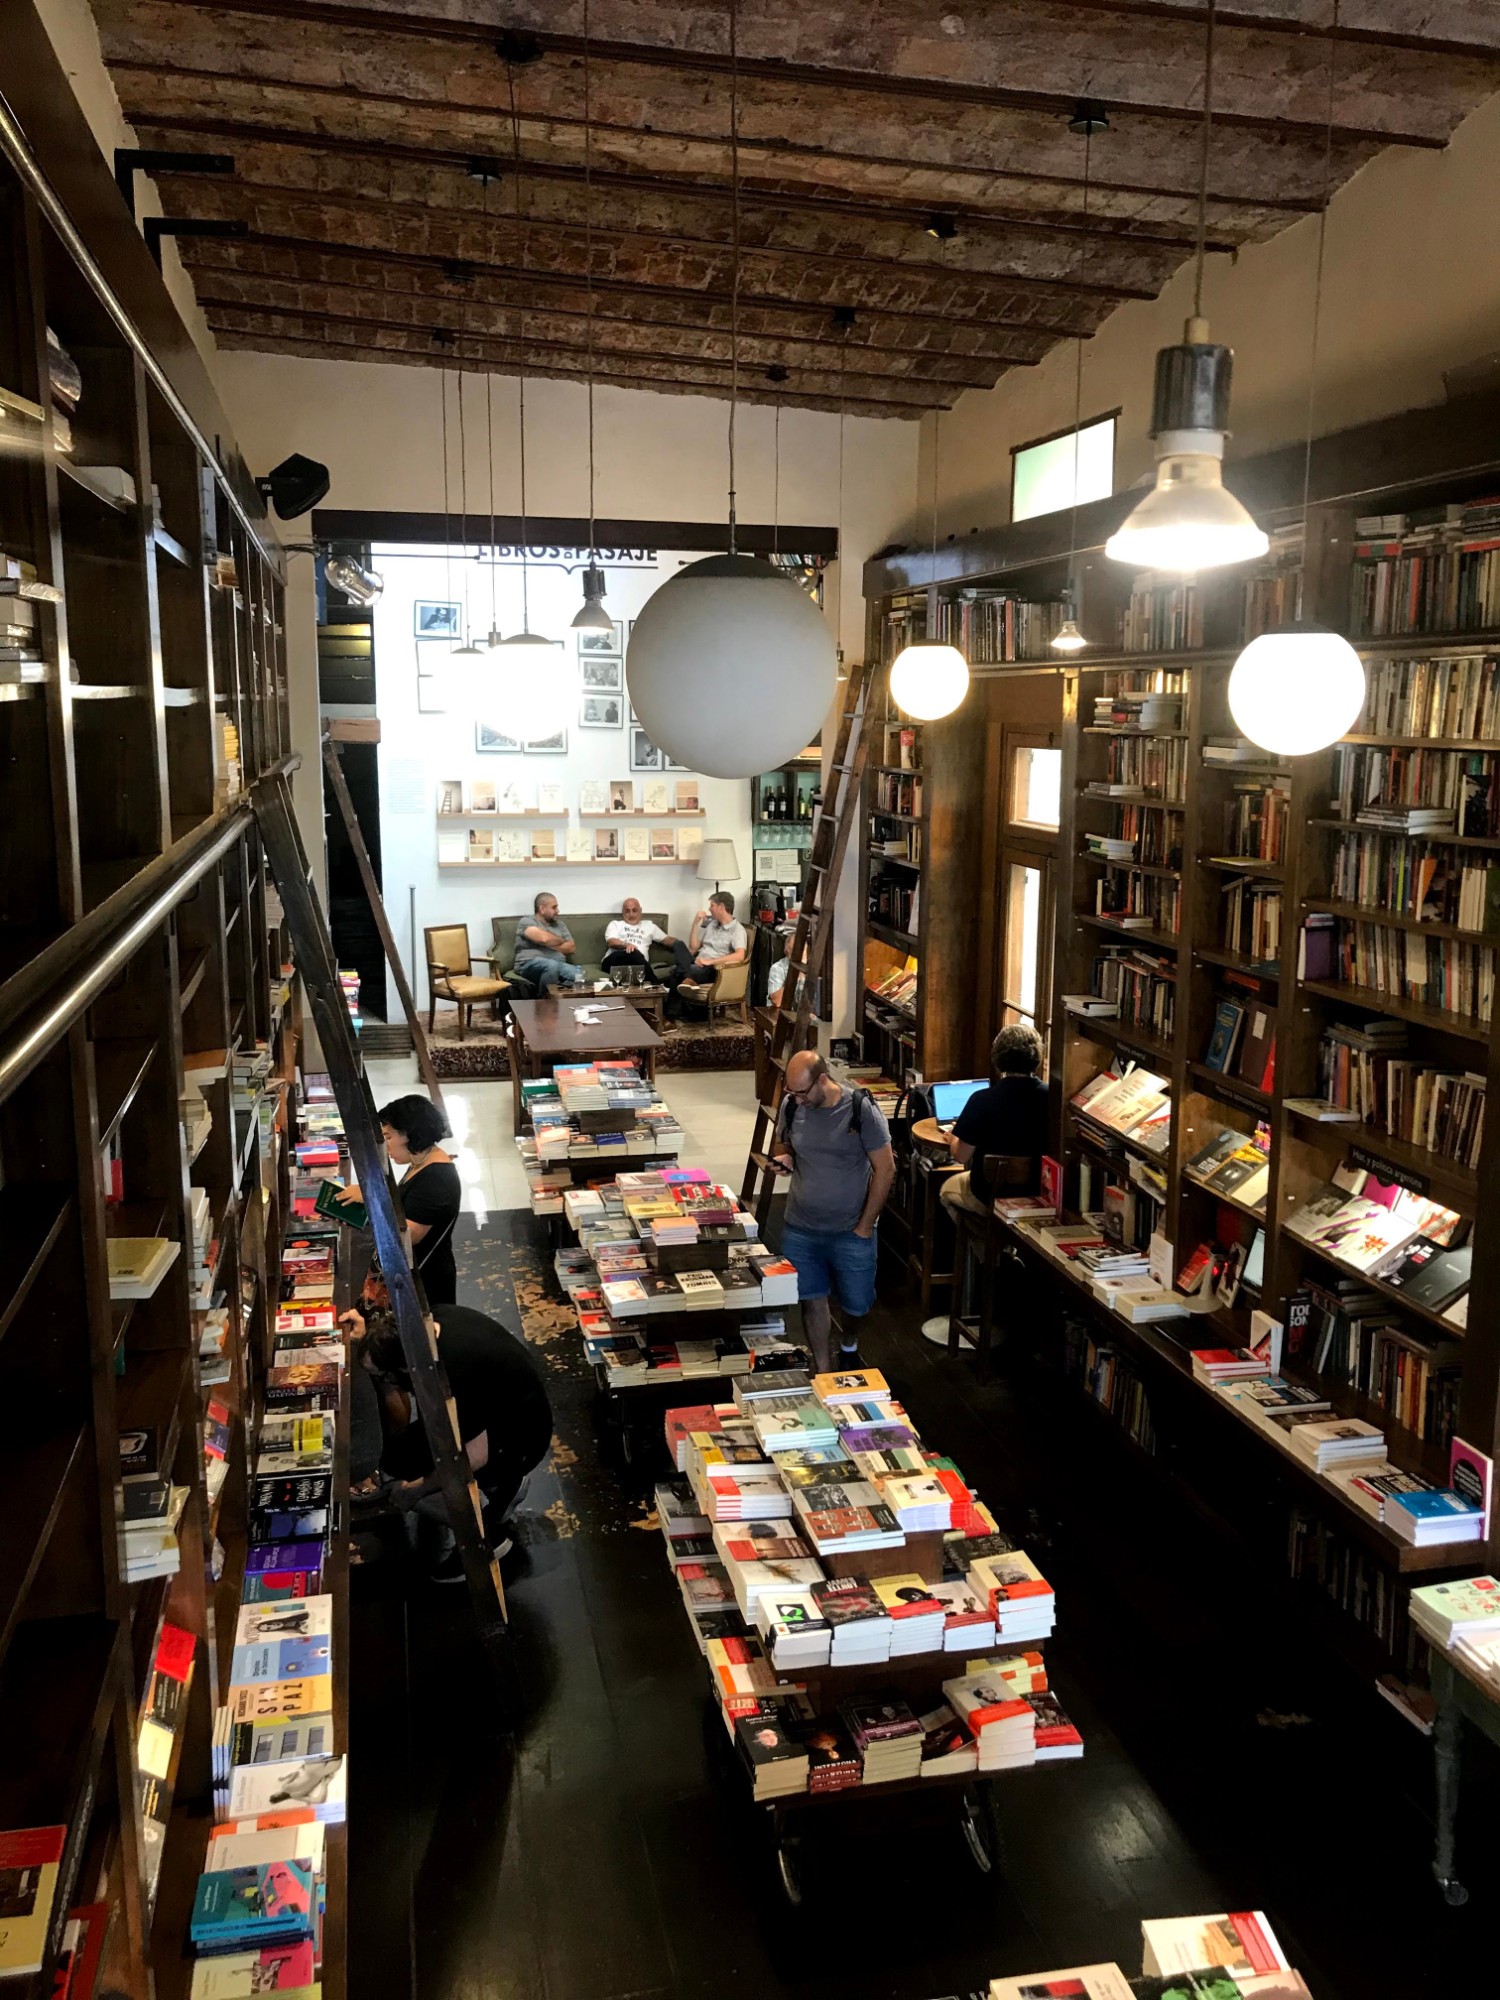 Libros del Pasaje bookshop in Buenos Aires - a travelling book lover's dream come true